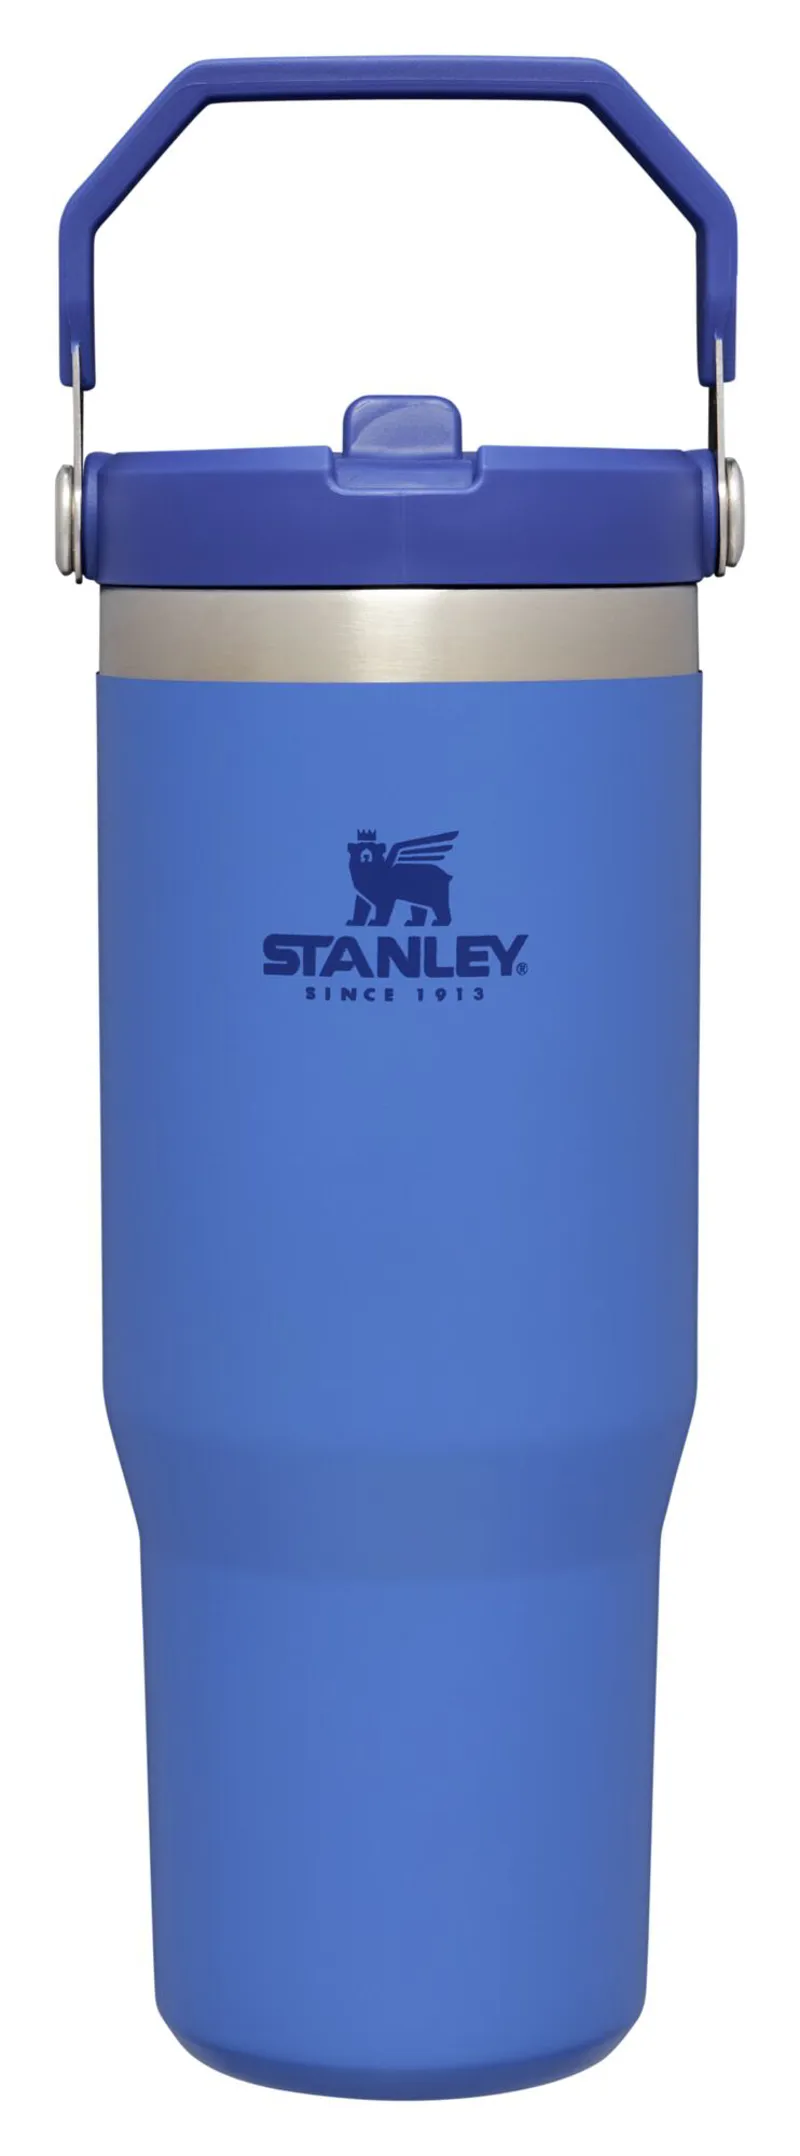 Stanley The IceFlow Flip Straw Tumbler Citron 0.89L - Stanley The